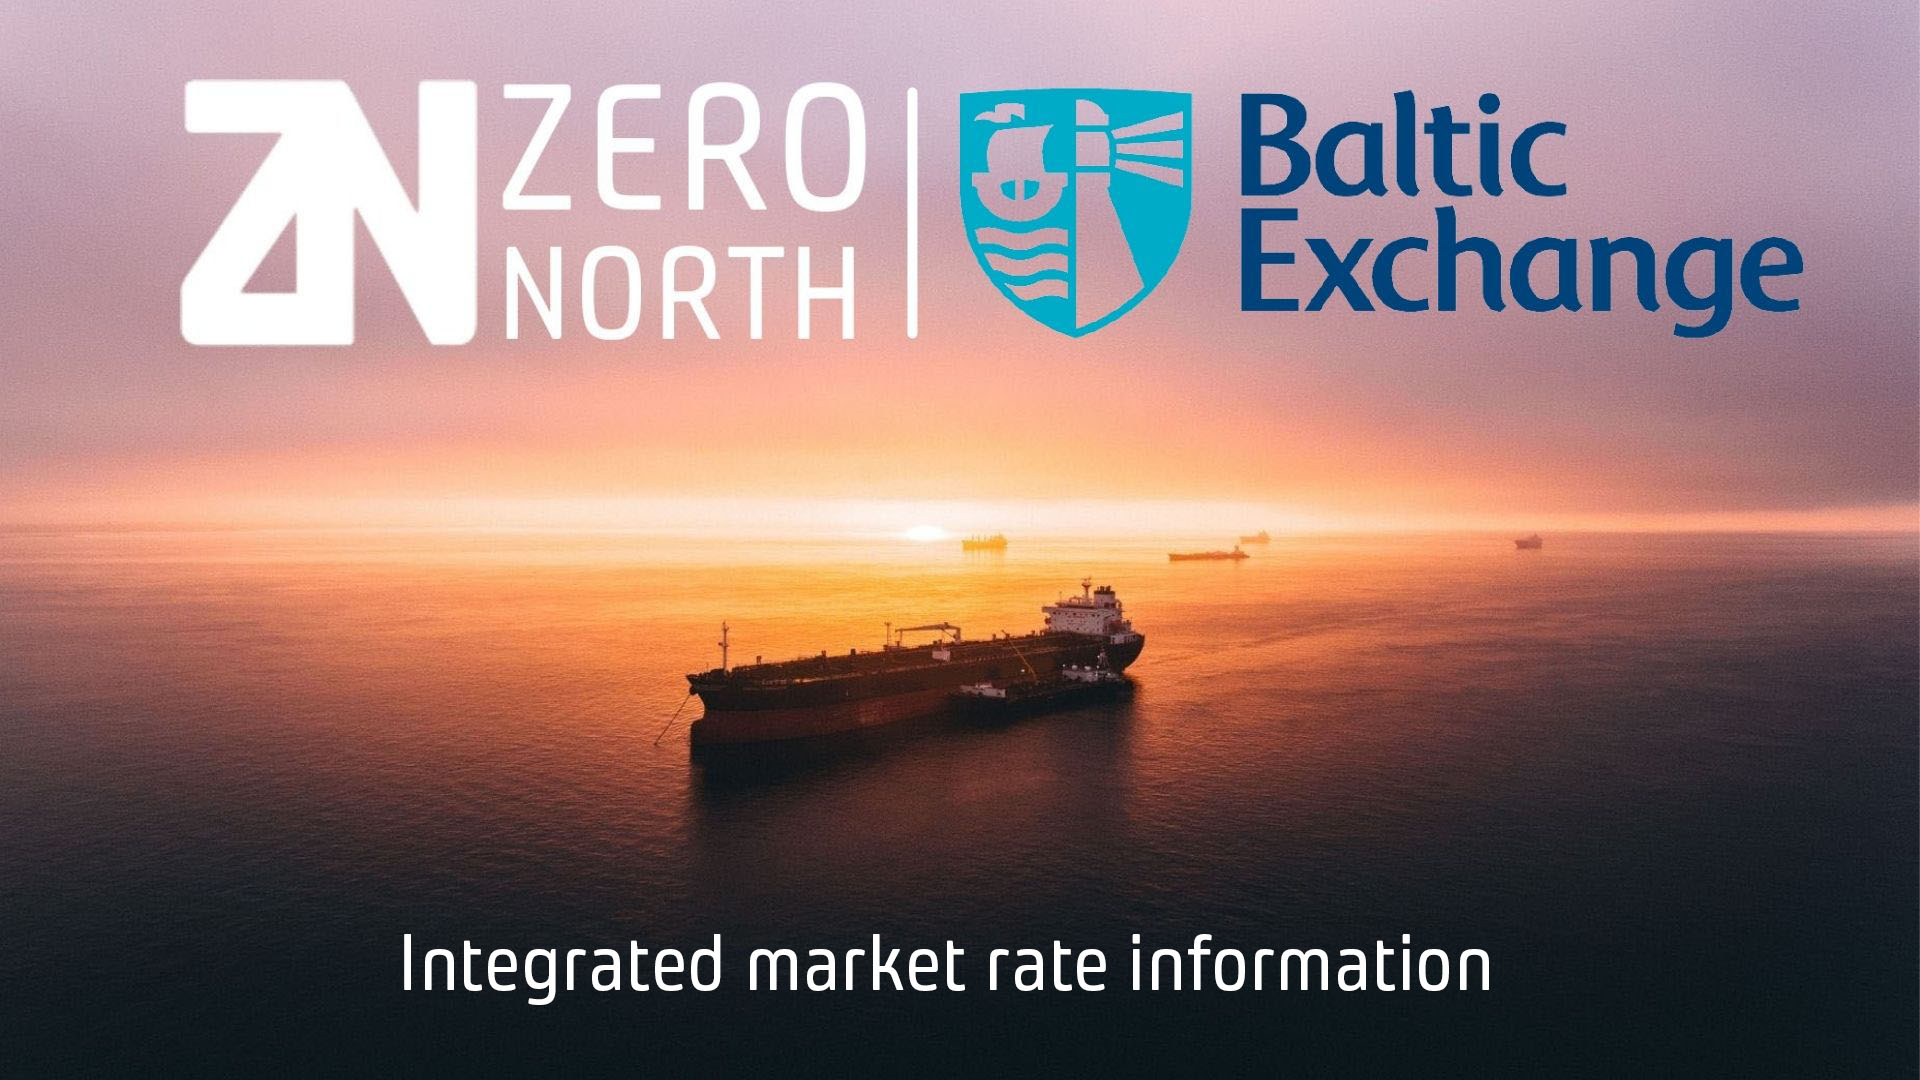 Baltic Exchange Blog